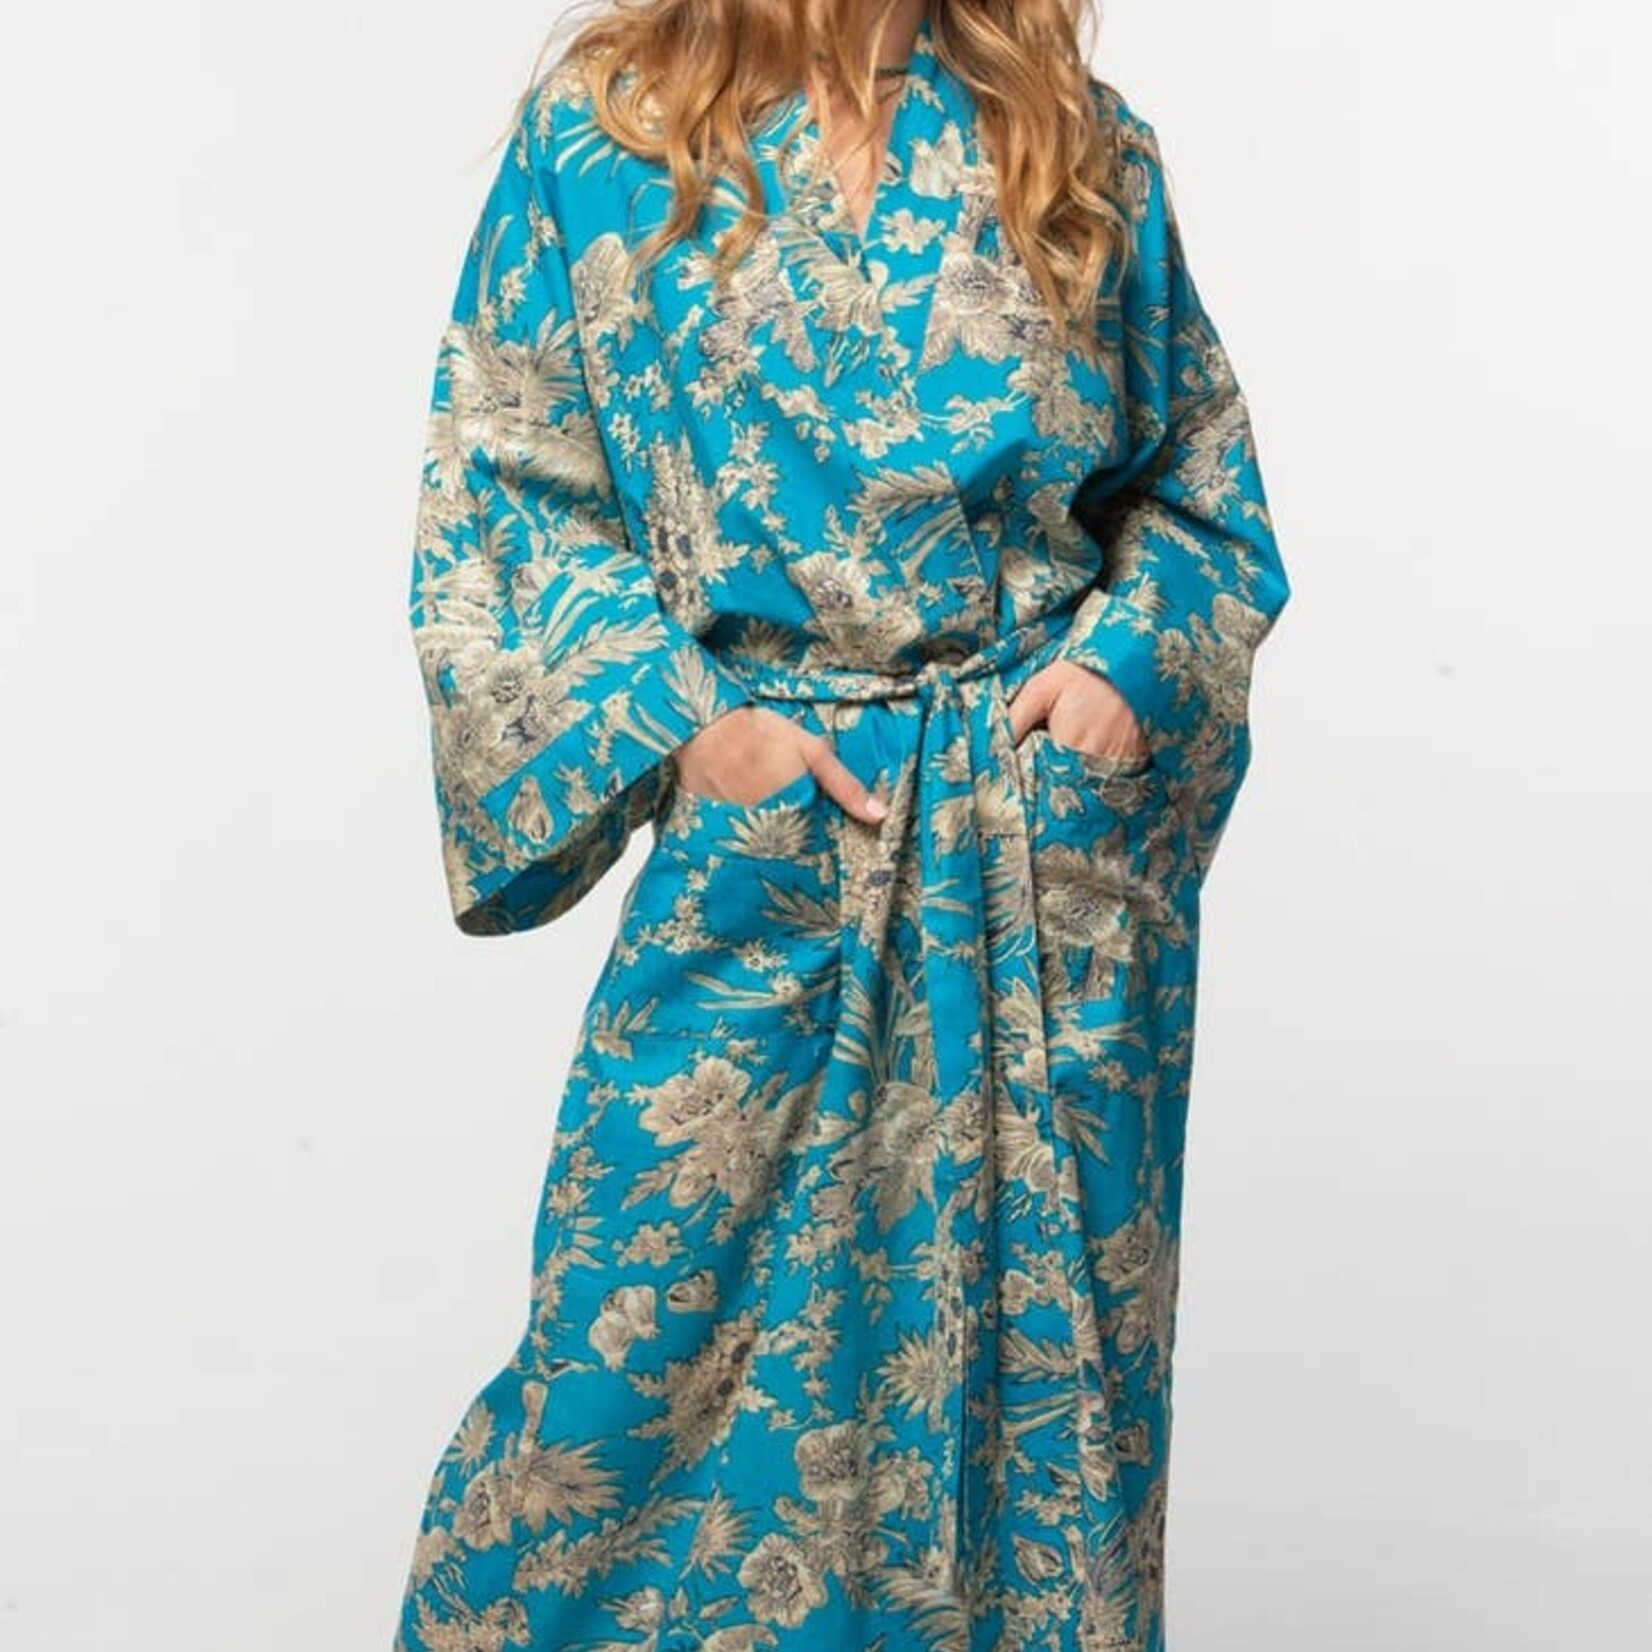 Sevya Handmade Cotton Kimono Robe--Turquoise and Gold, India